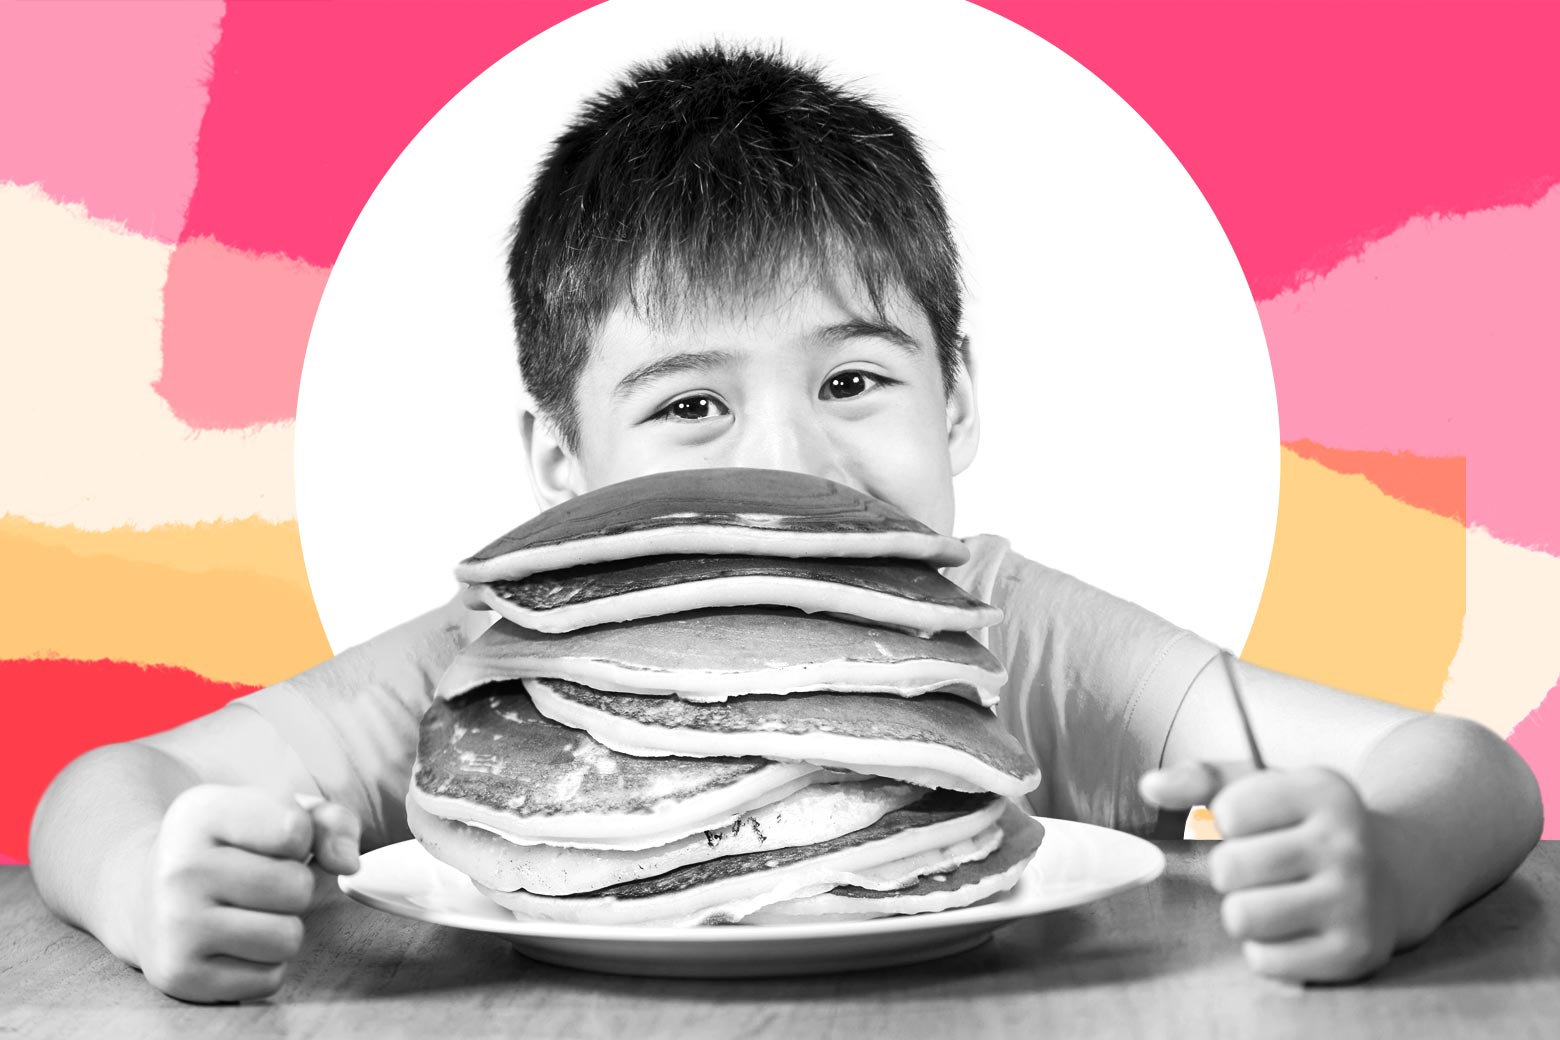 Boy eating a huge stack of pancakes. 